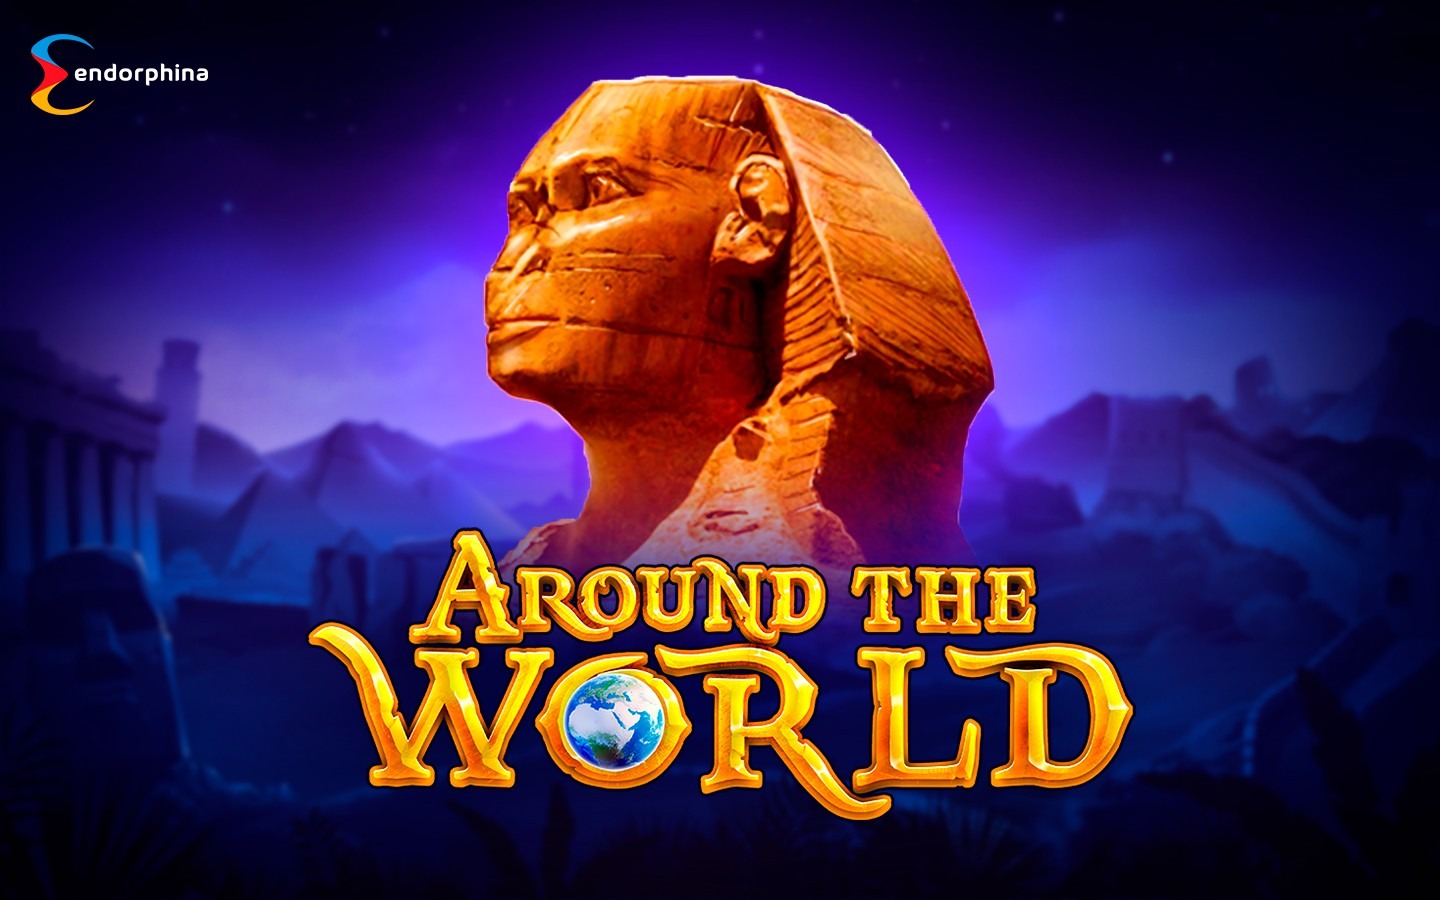 around the world slot review